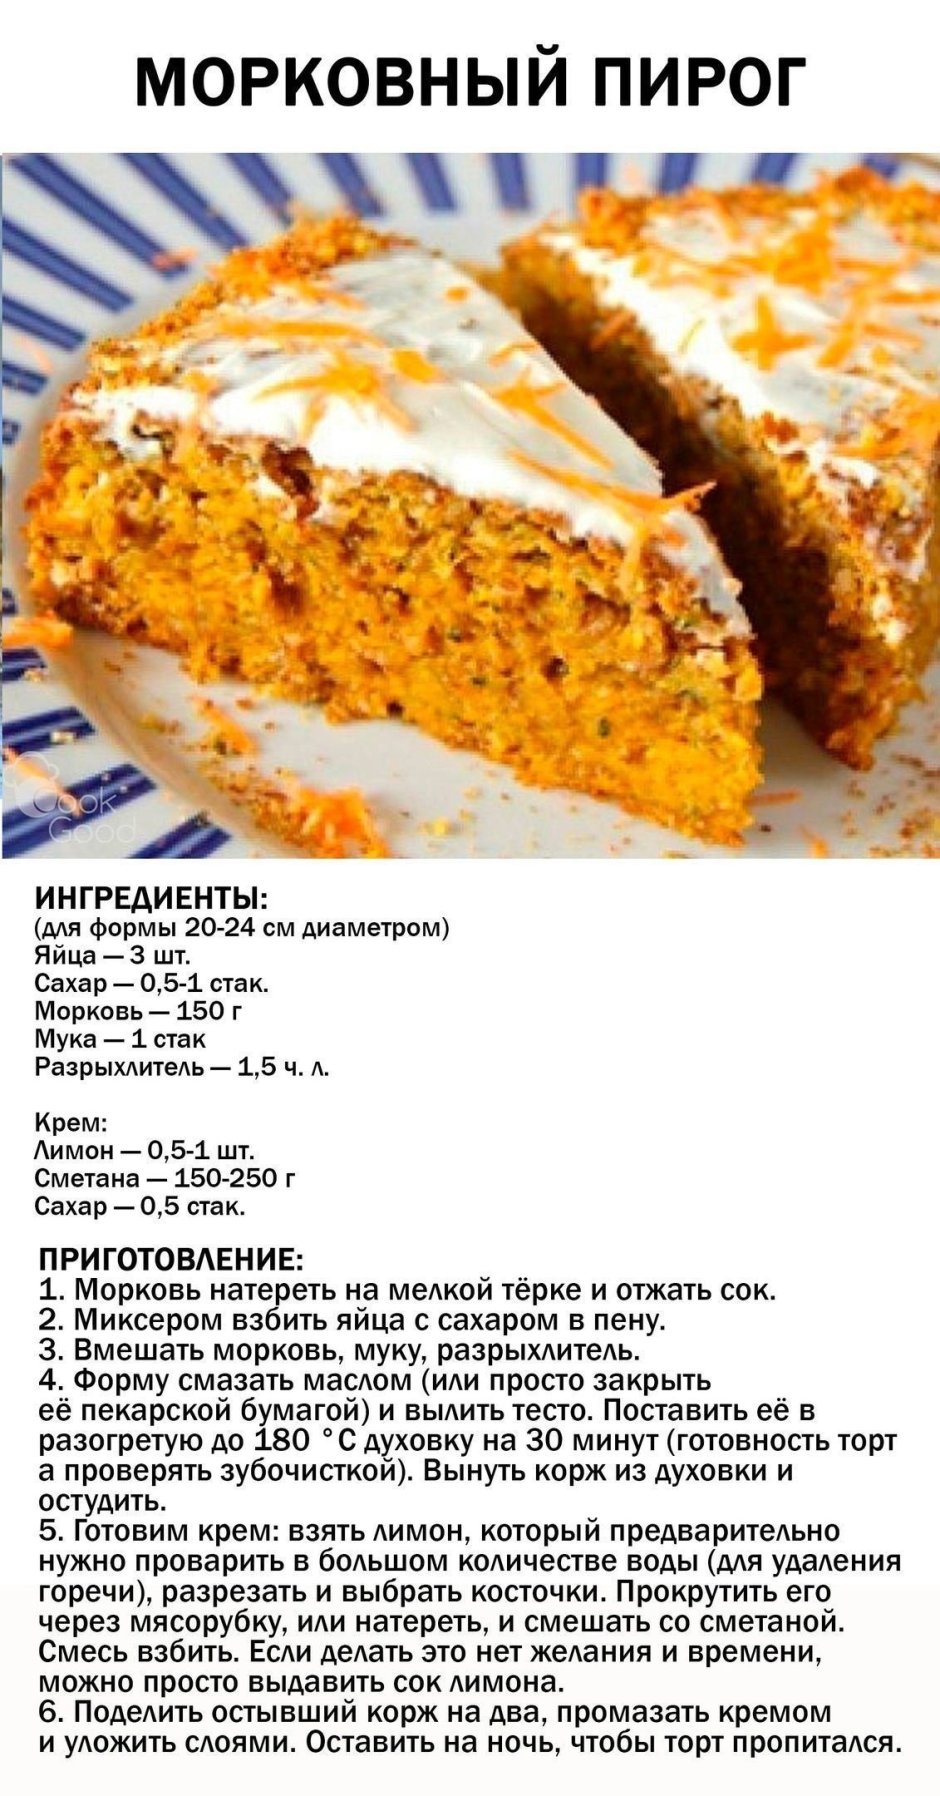 Рецепт морковного пирога из журнала